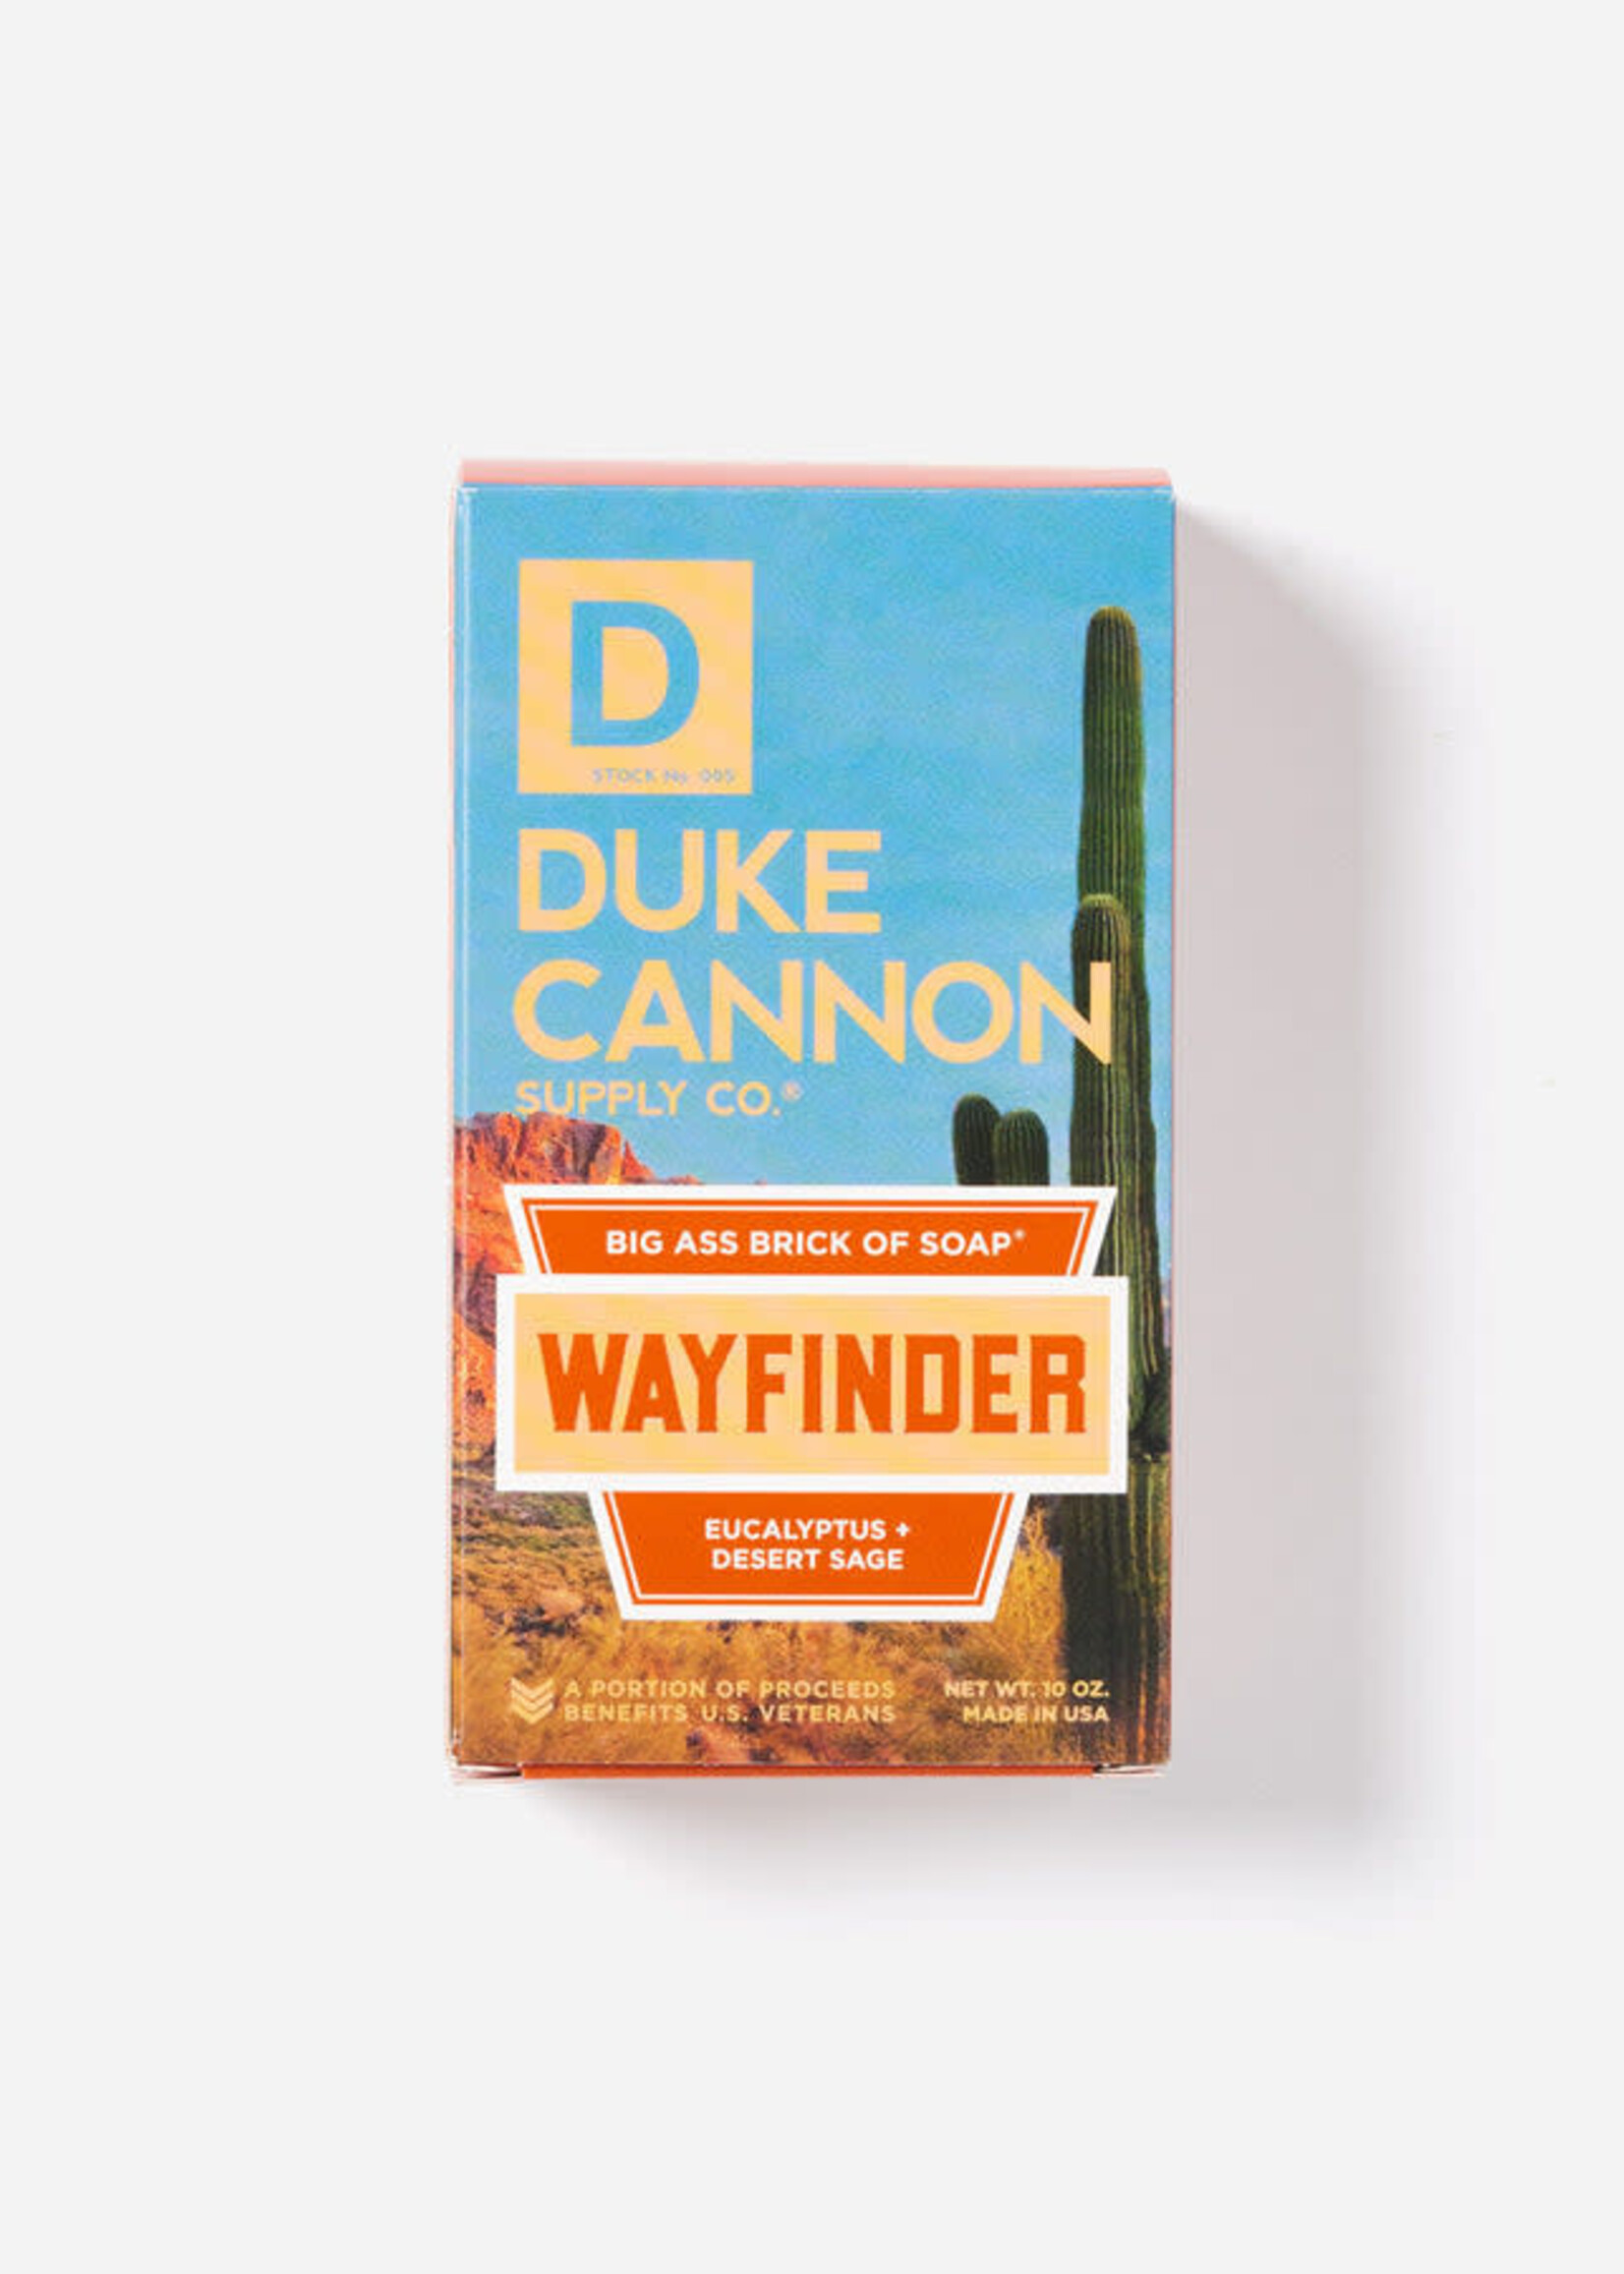 Duke Cannon DC Big Ass Brick of Soap - Wayfinder